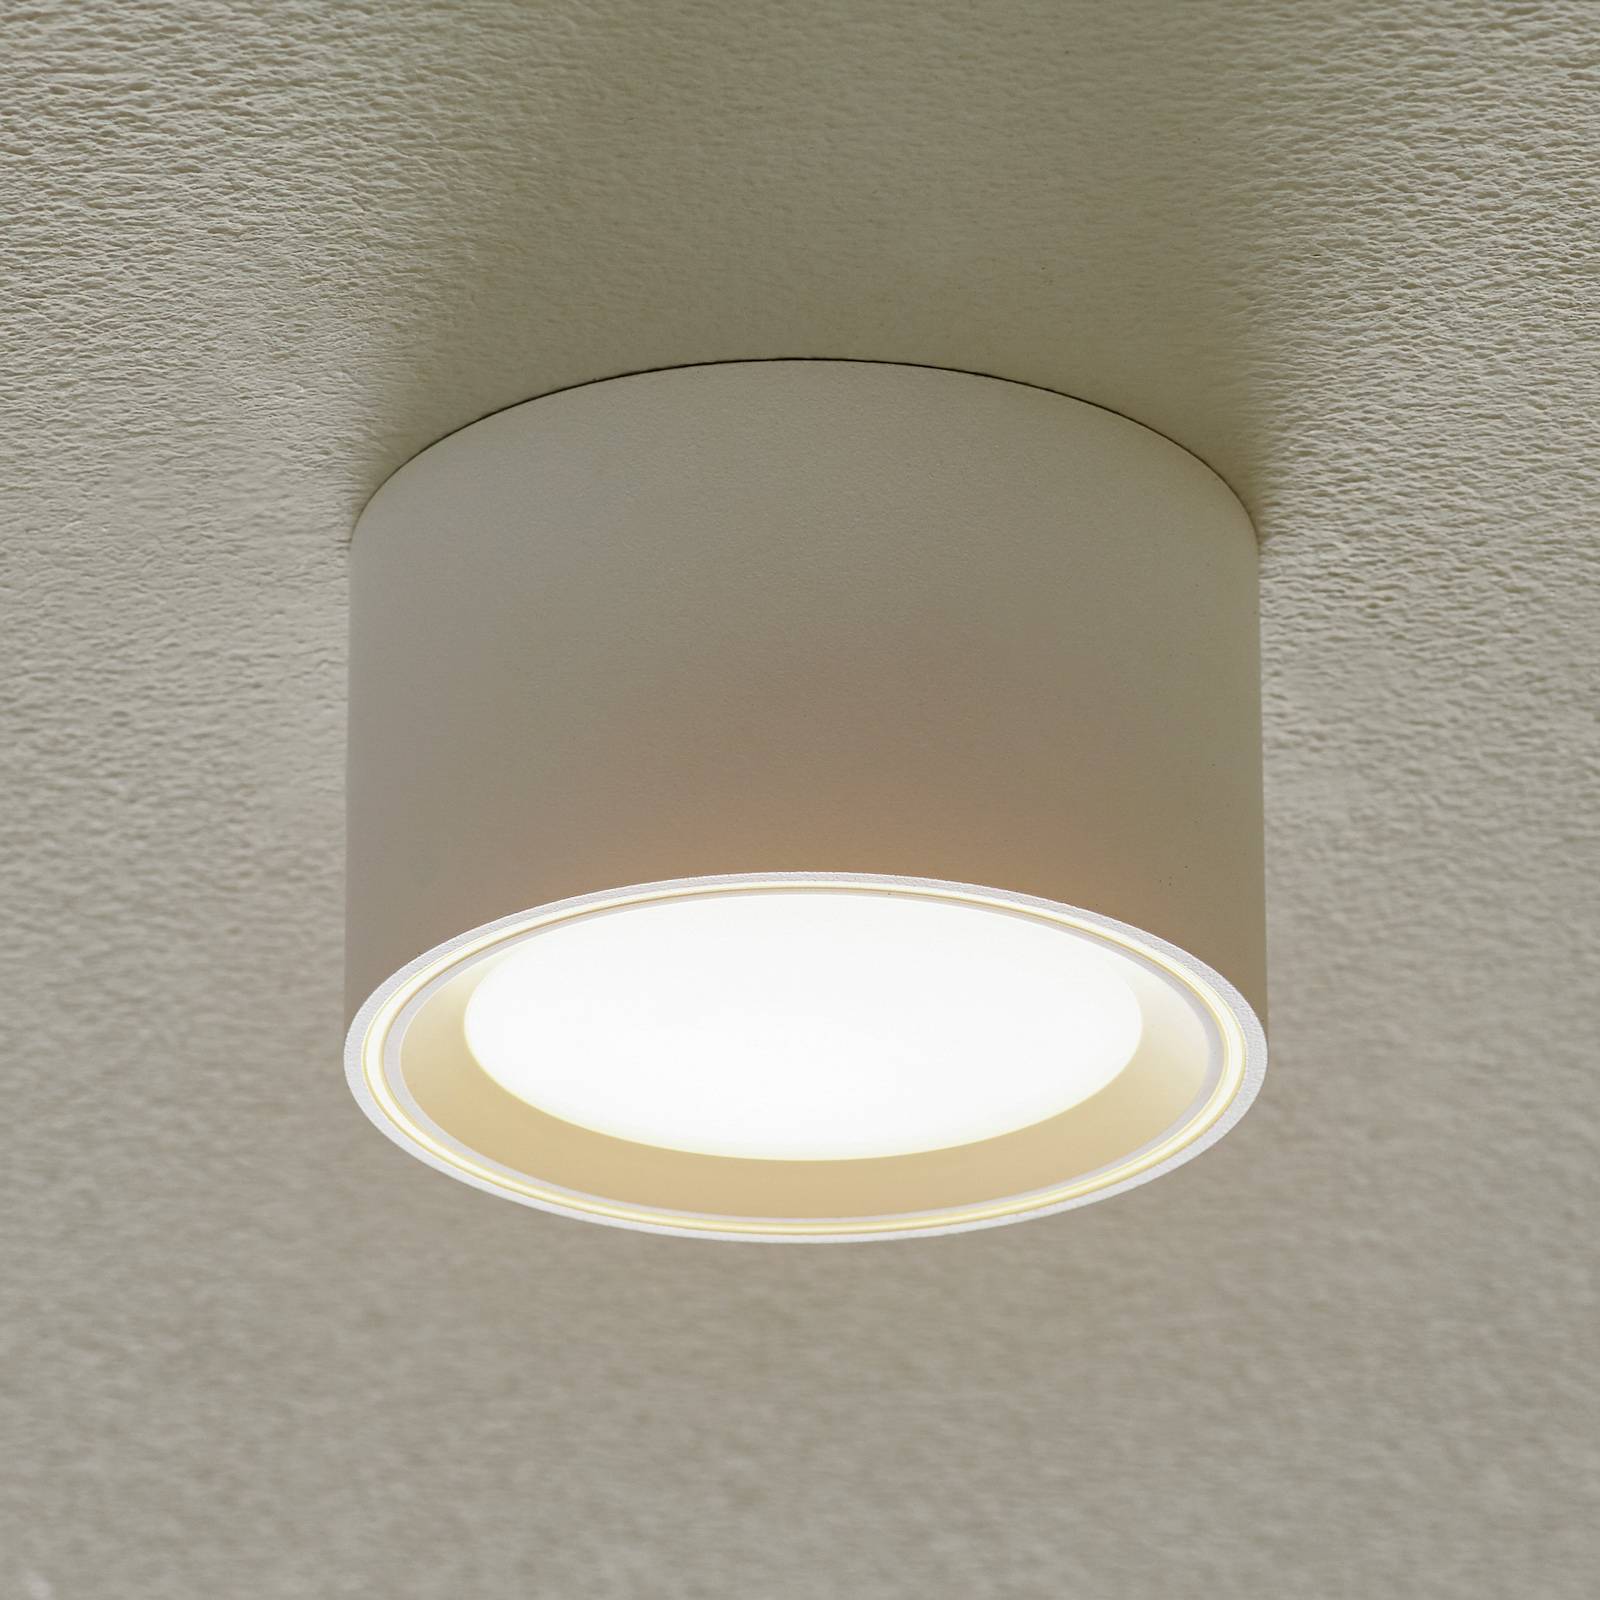 Fallon-LED-kattovalaisin, korkeus 6 cm